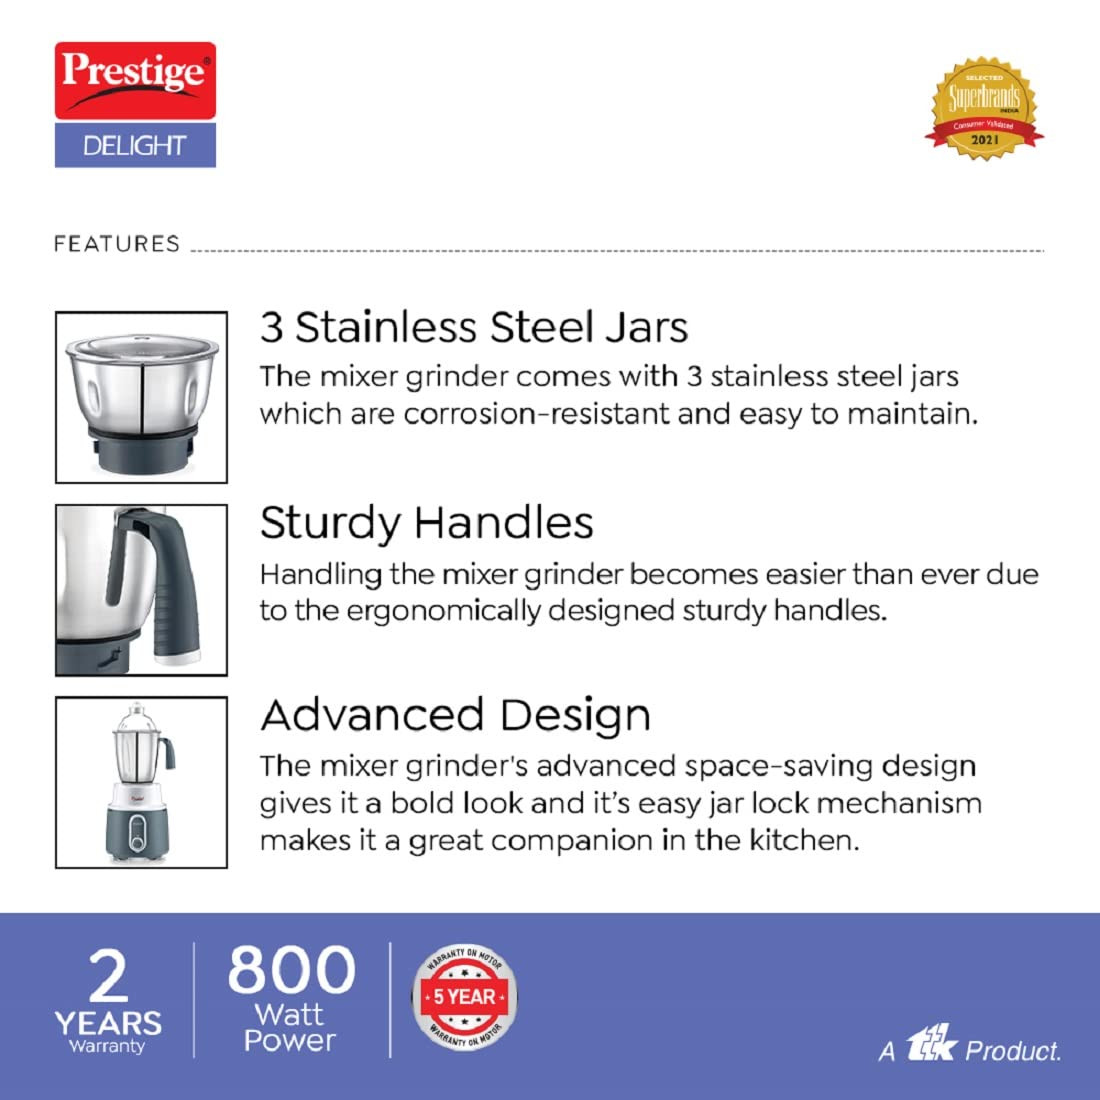 Prestige Delight Mixer Grinder 750 W With 3 Stainless Steel Jars